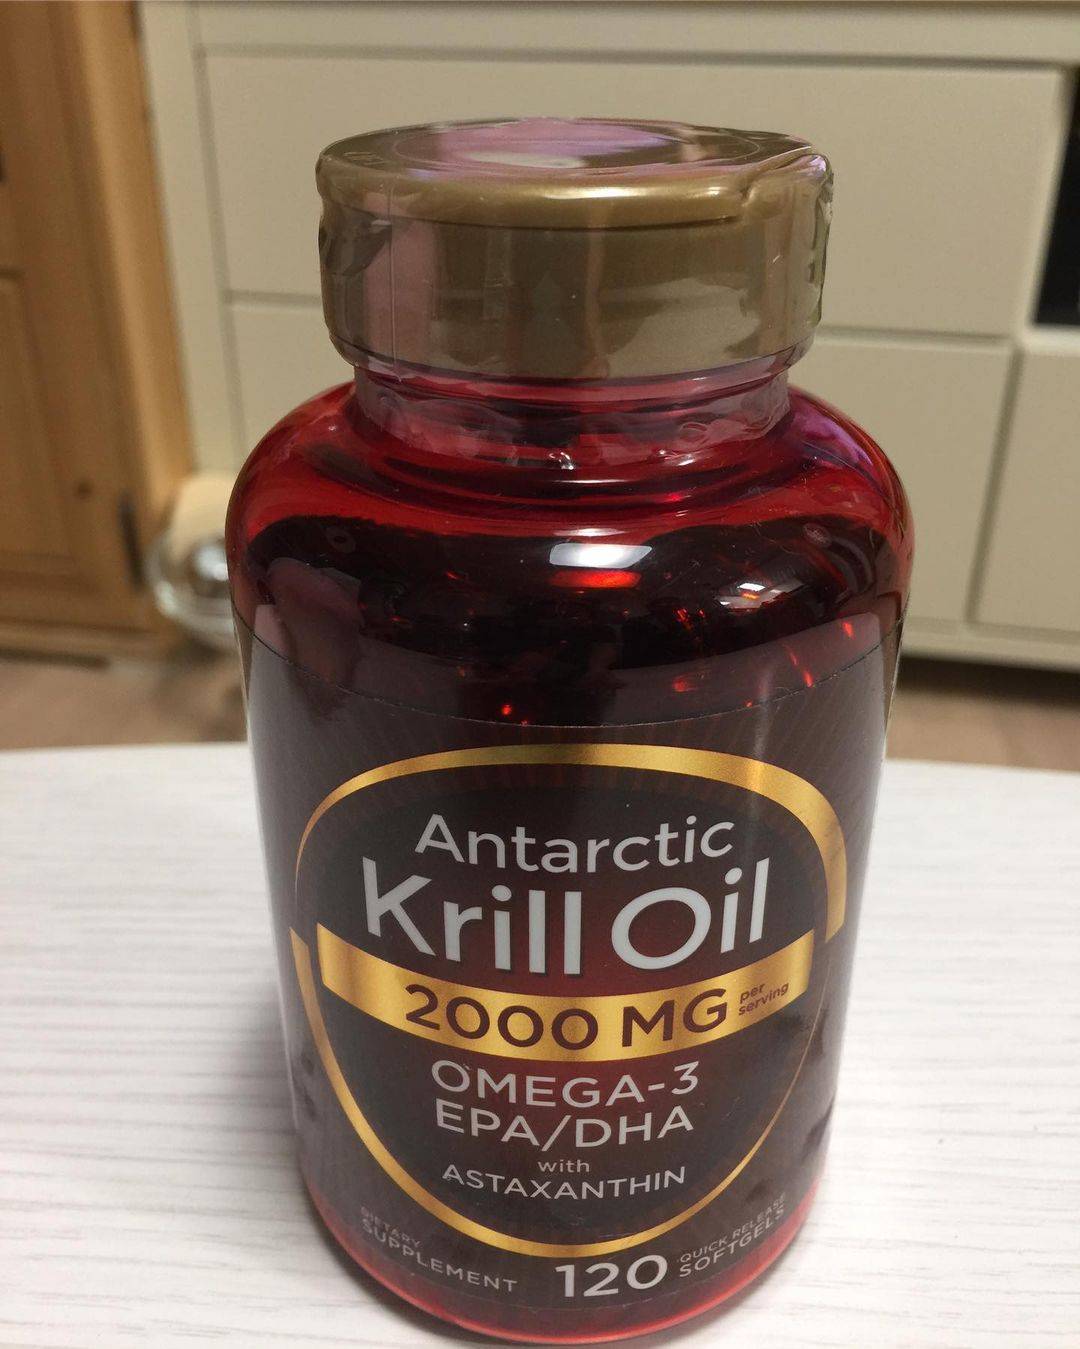 Carlyle Krill Oil instagram